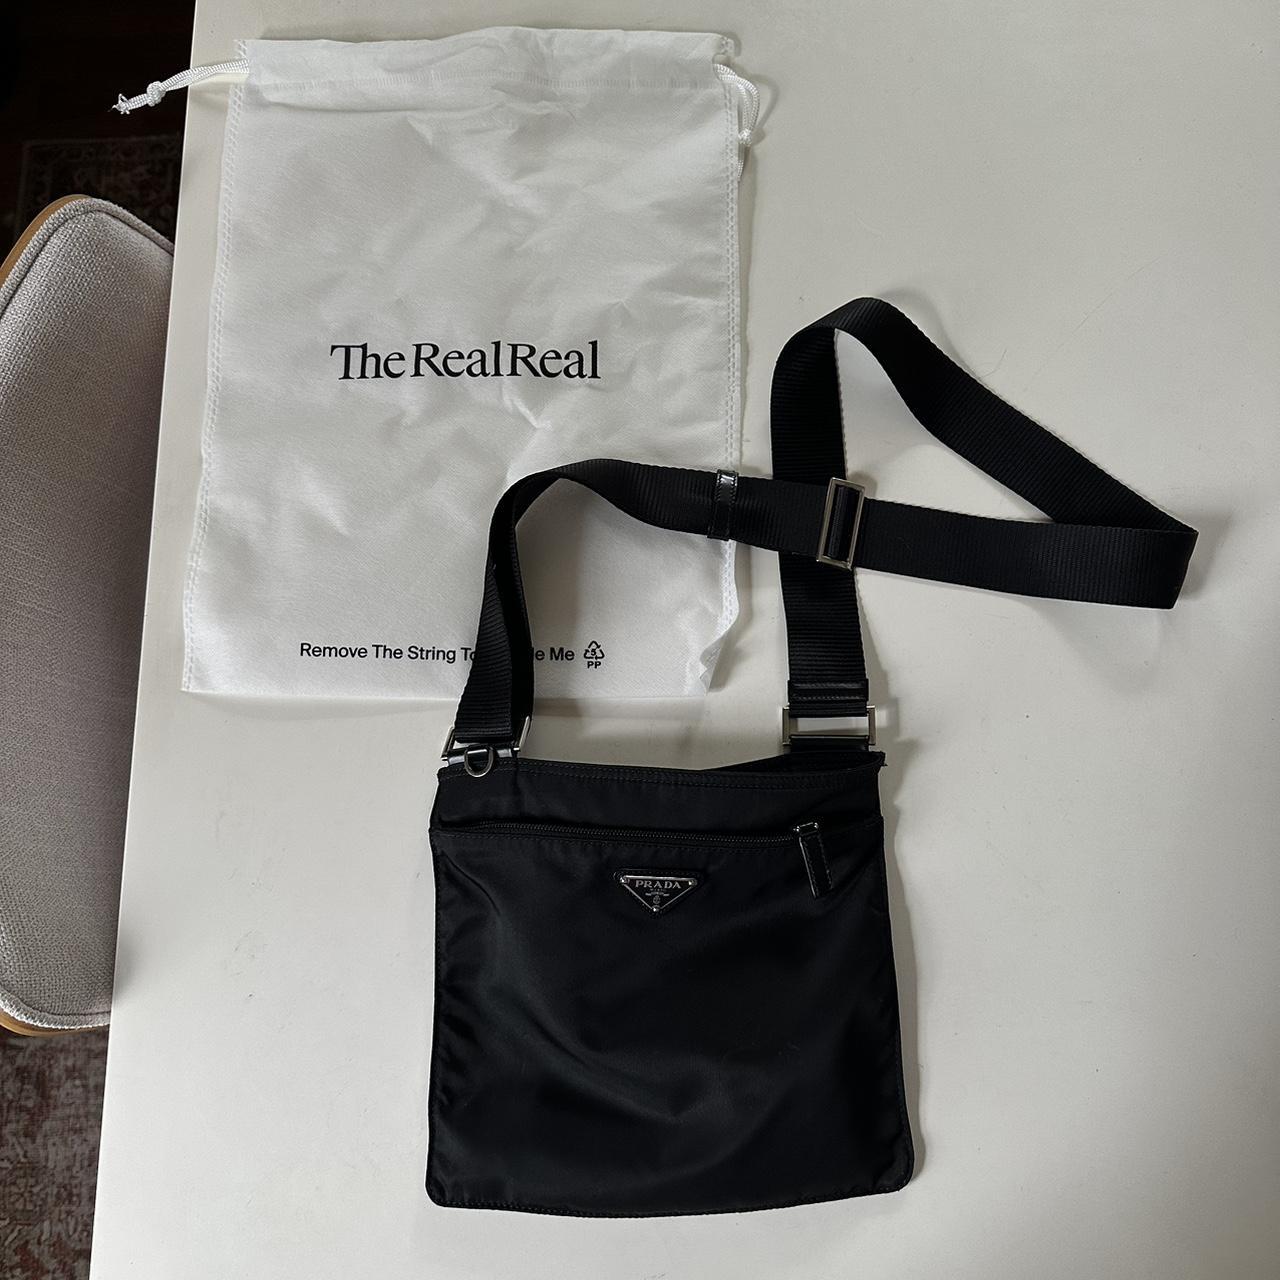 Prada Vela Flat Messenger Bag - Black Crossbody Bags, Handbags